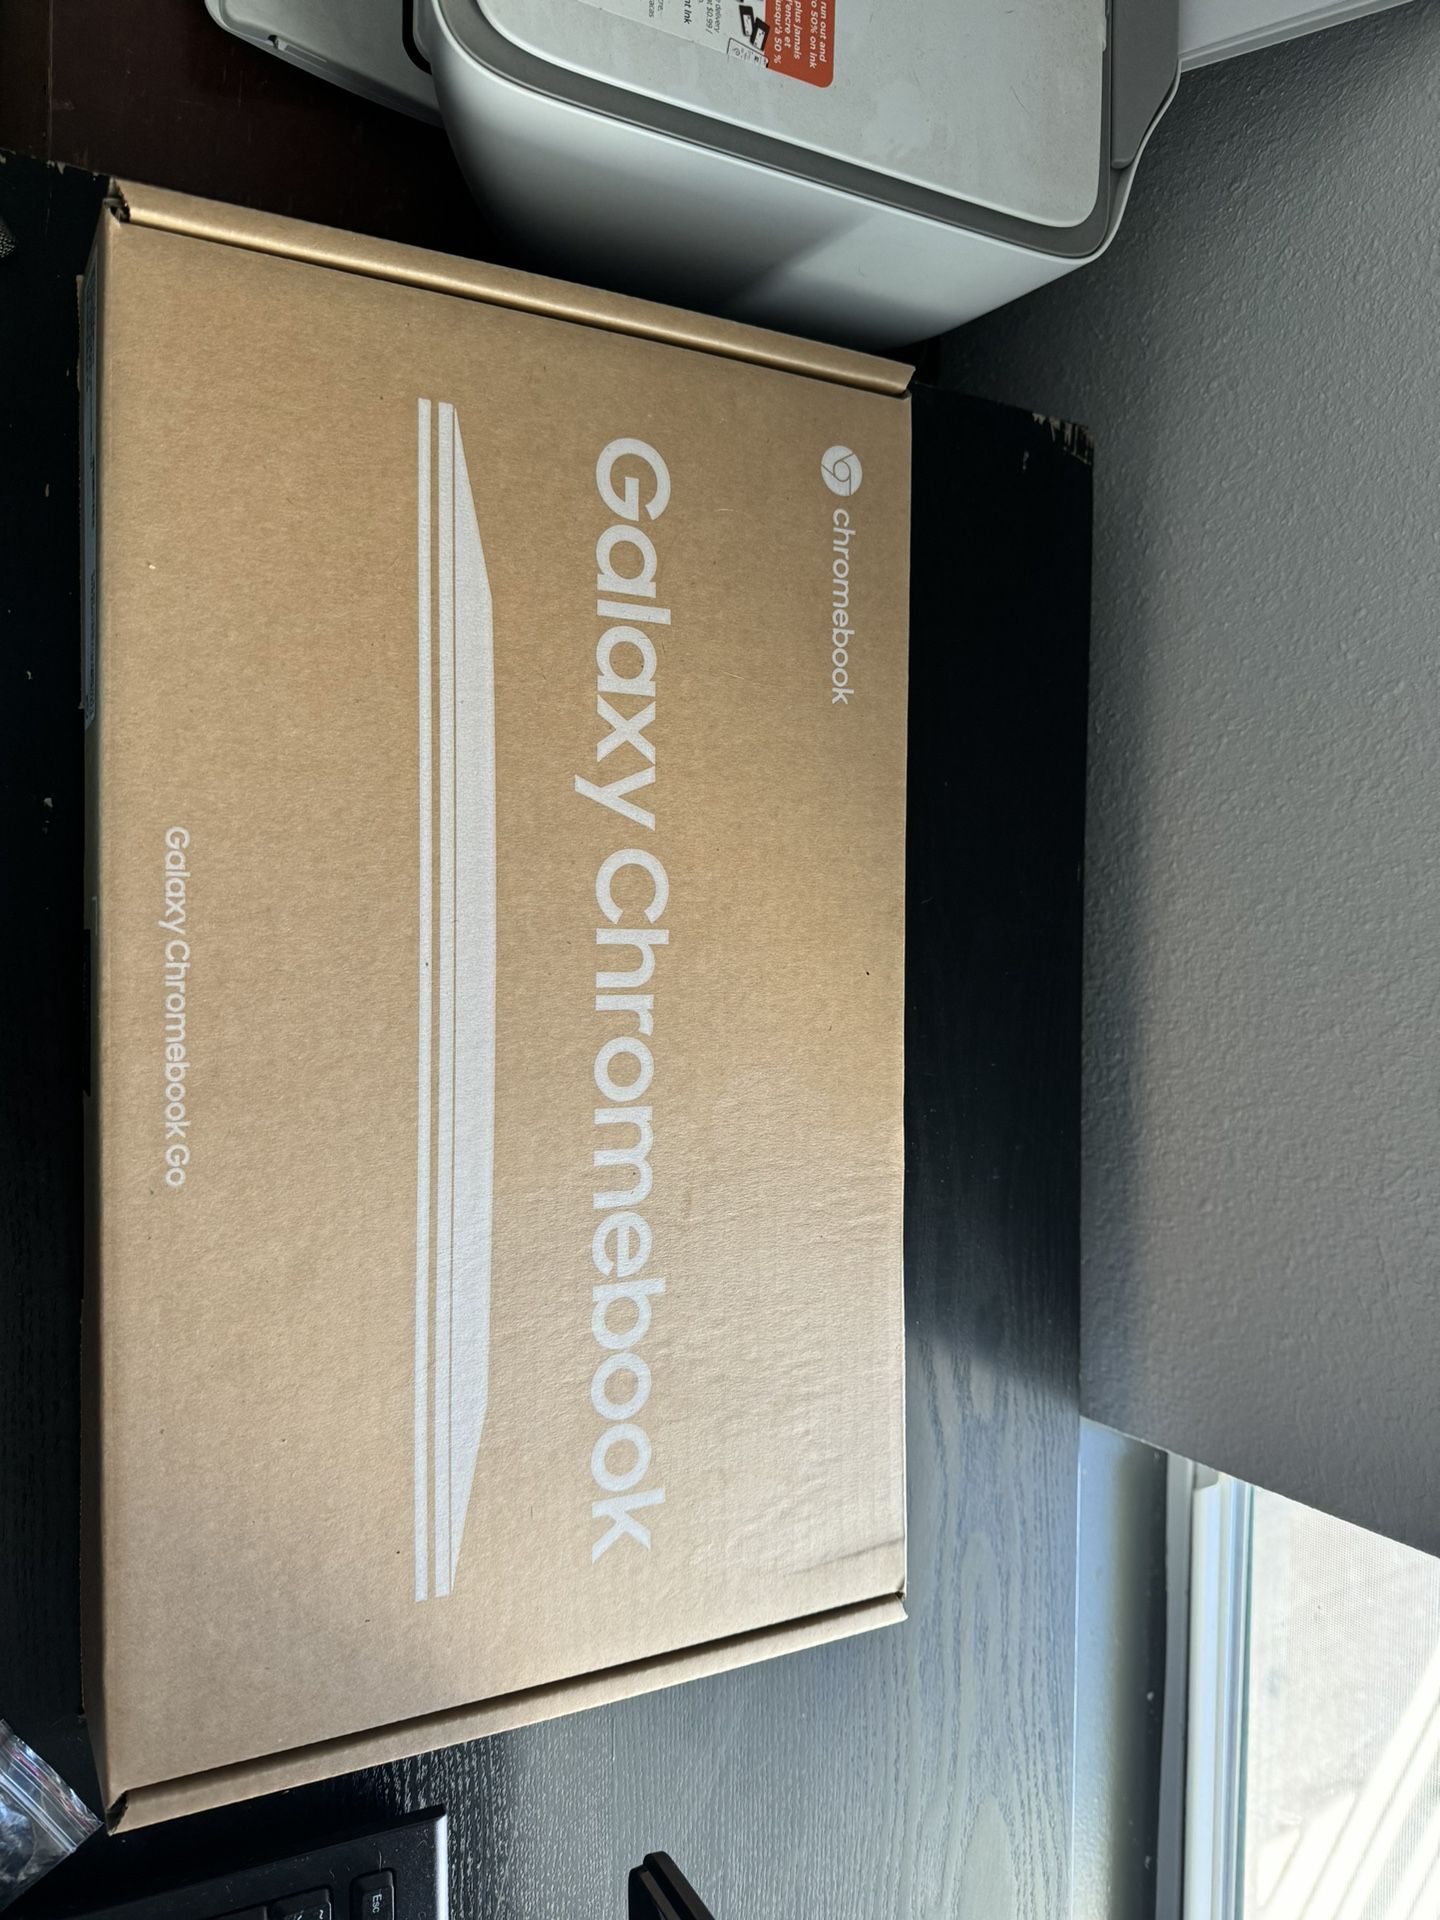 Galaxy Chromebook Go 14”, LTE, 32GB, Silver(Verizon)